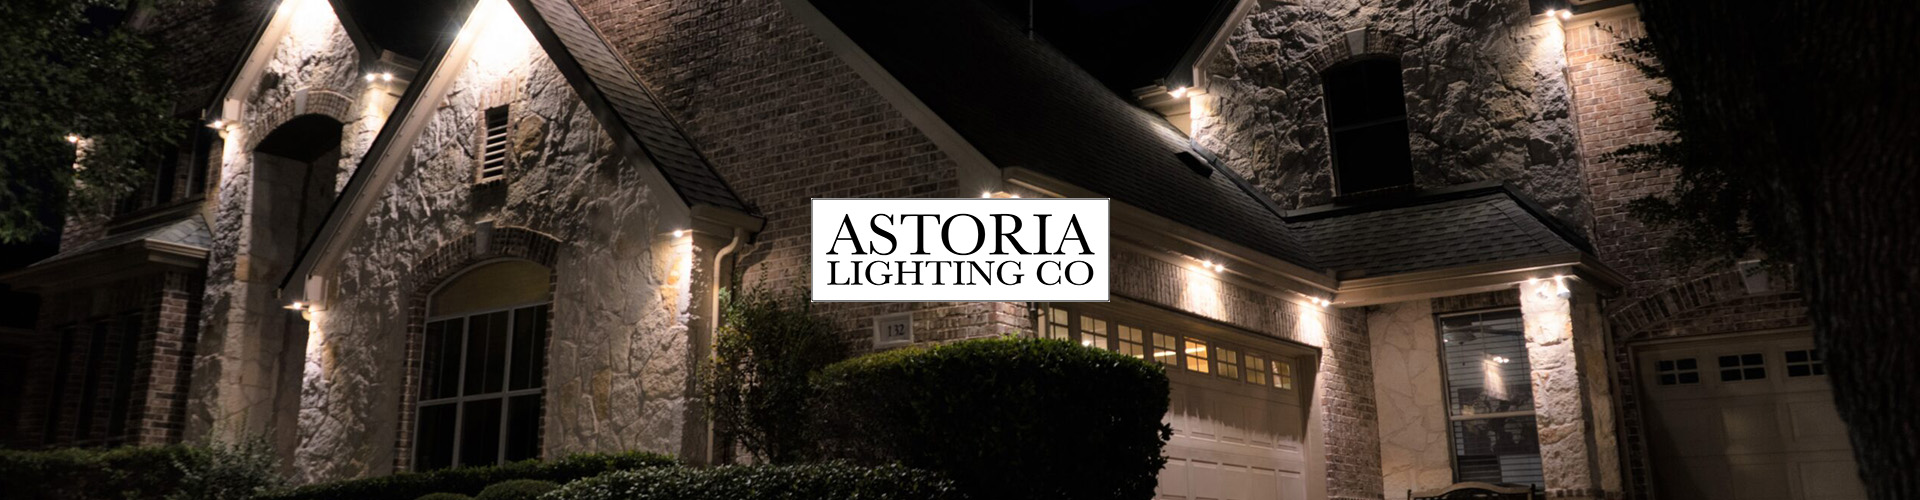 Case Study - Astoria Lighting